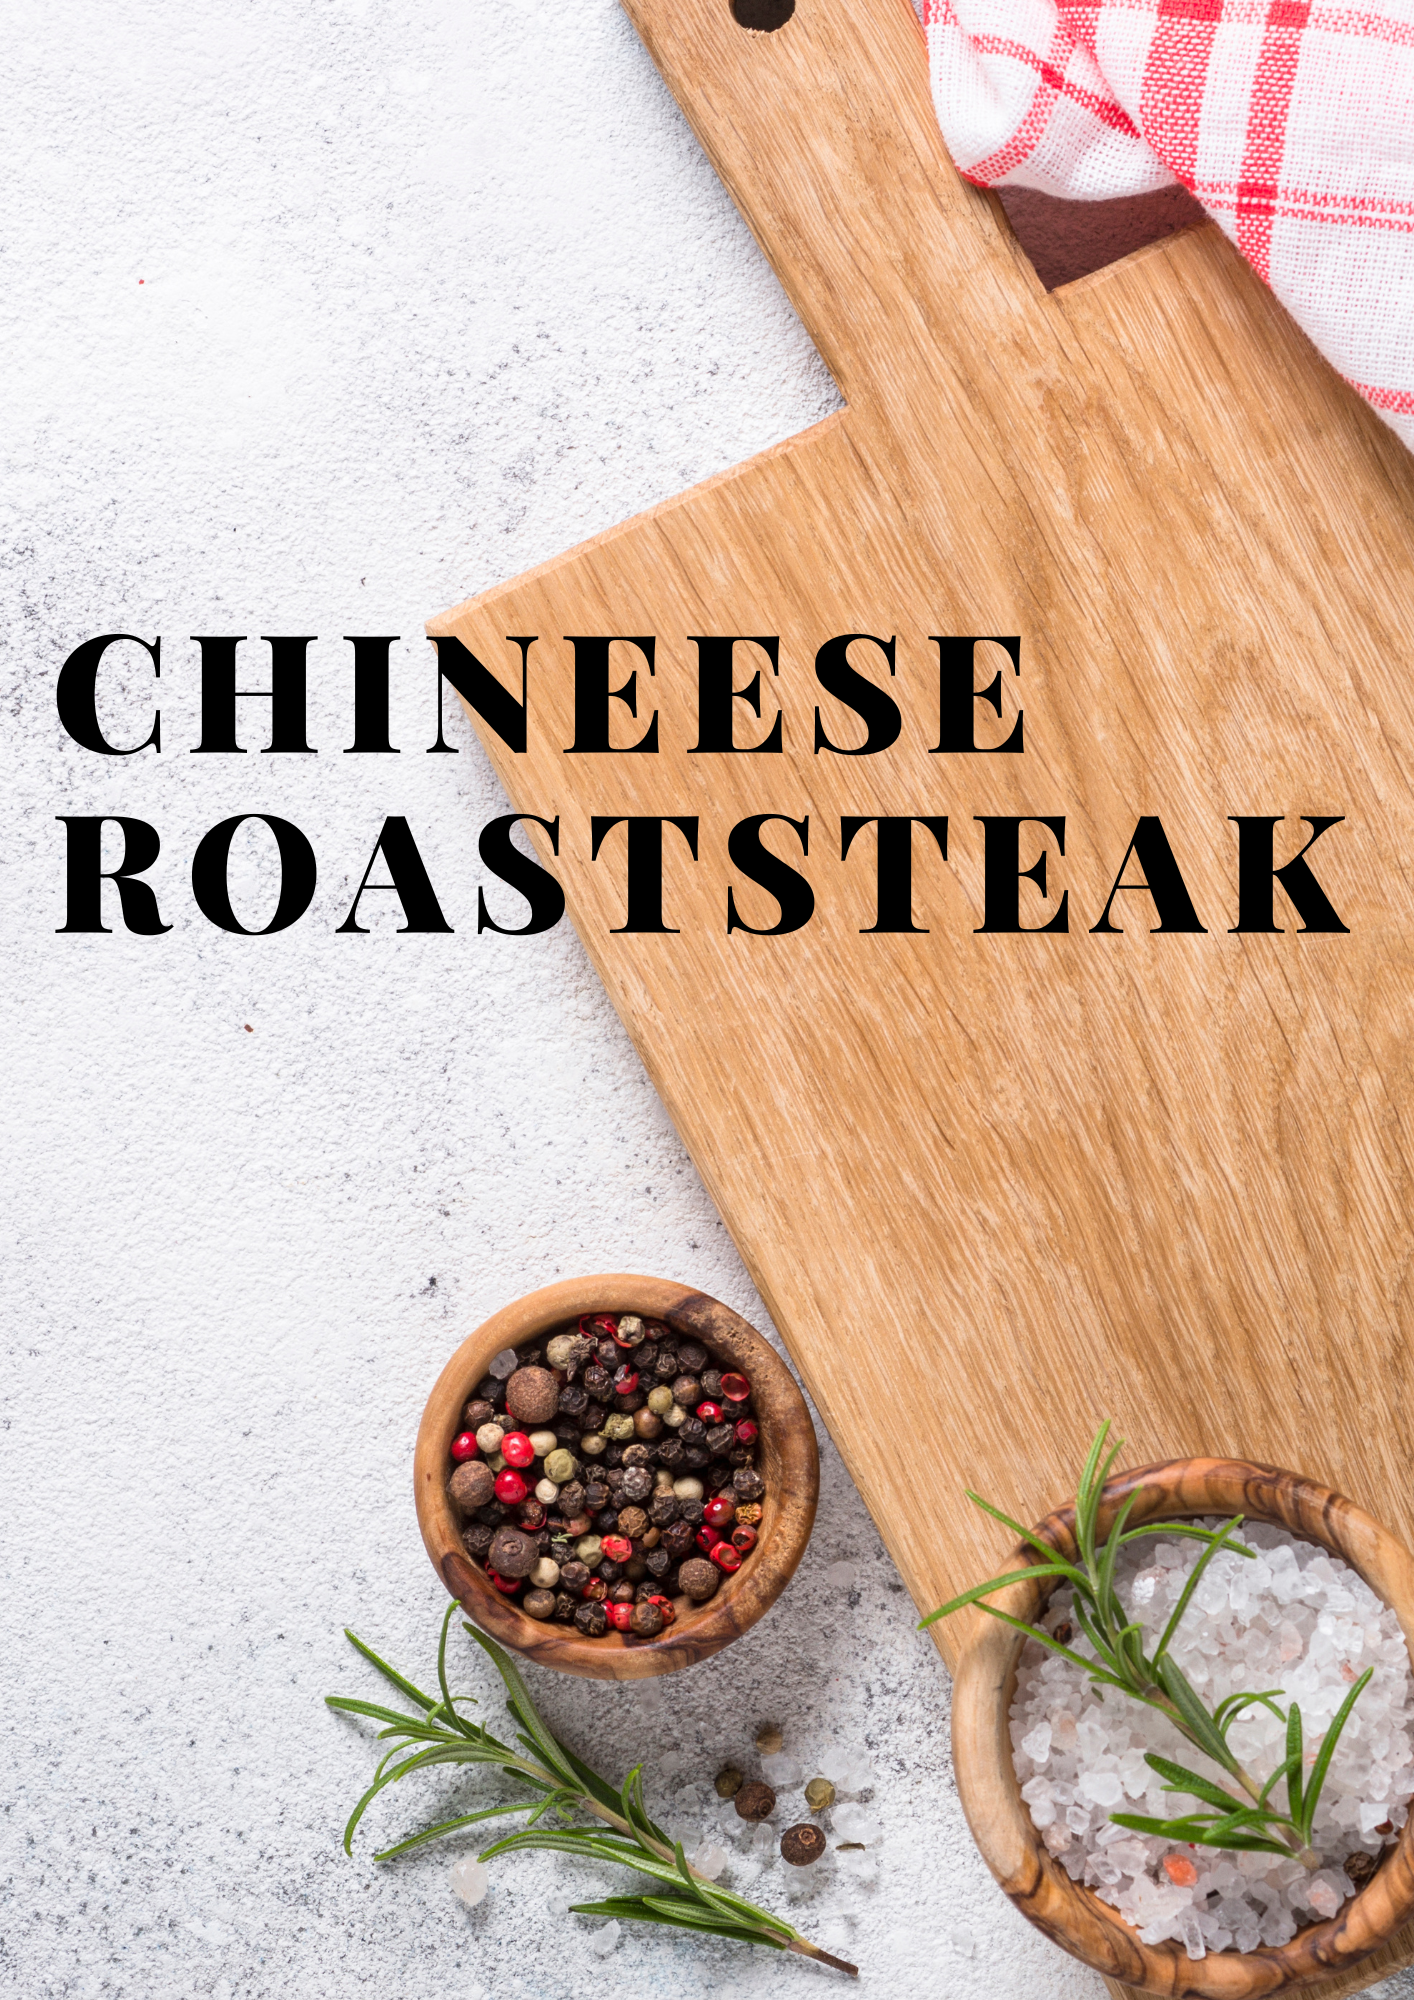 Chineese roaststeak-1